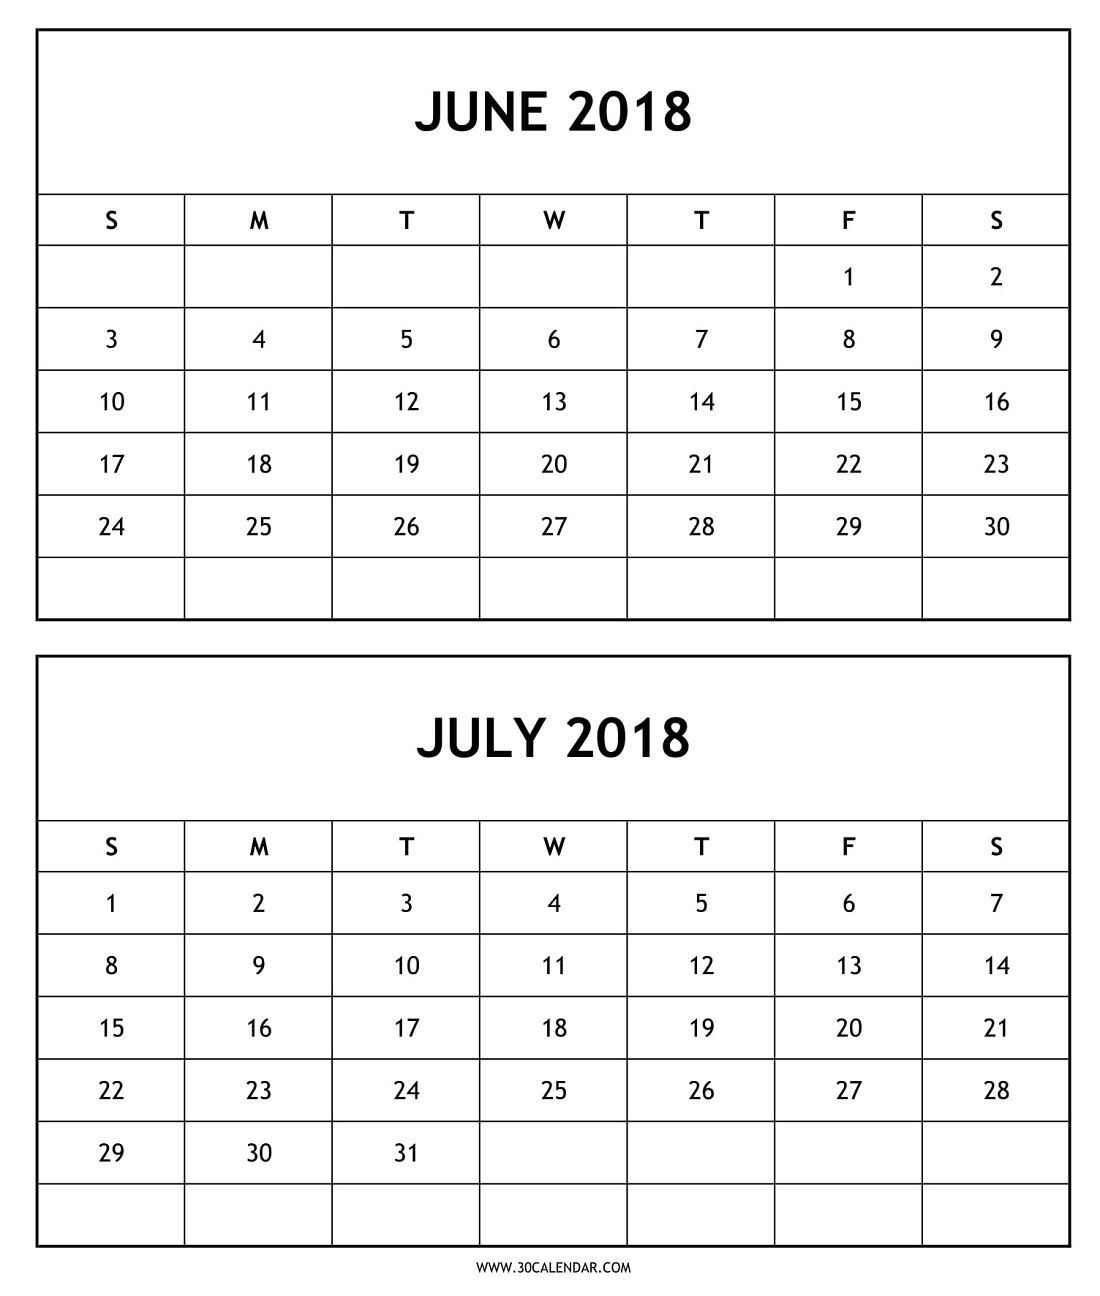 Download And Edit Calendar June July 2018 | 2018 Calendar | Calendar  Calendar For June July